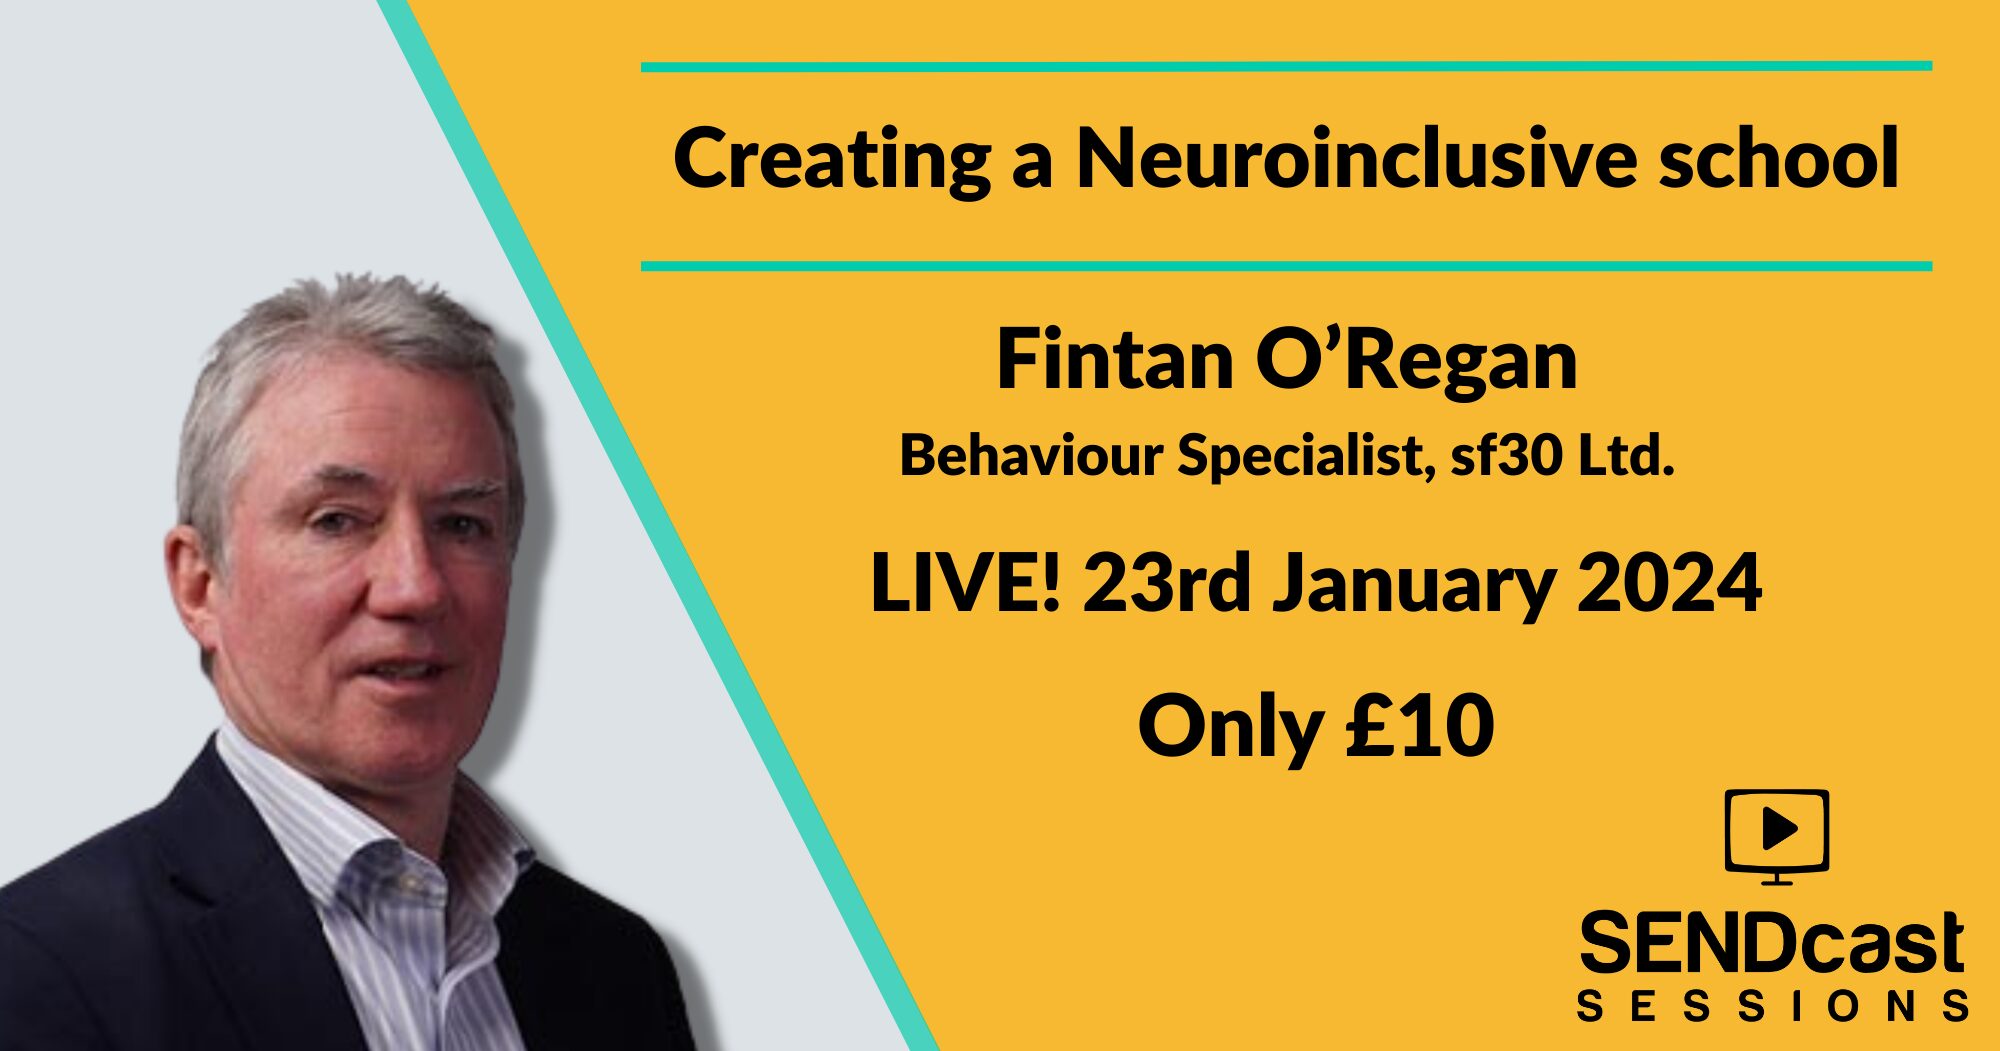 Fintan O'Regan neuroinclusive school LIVE